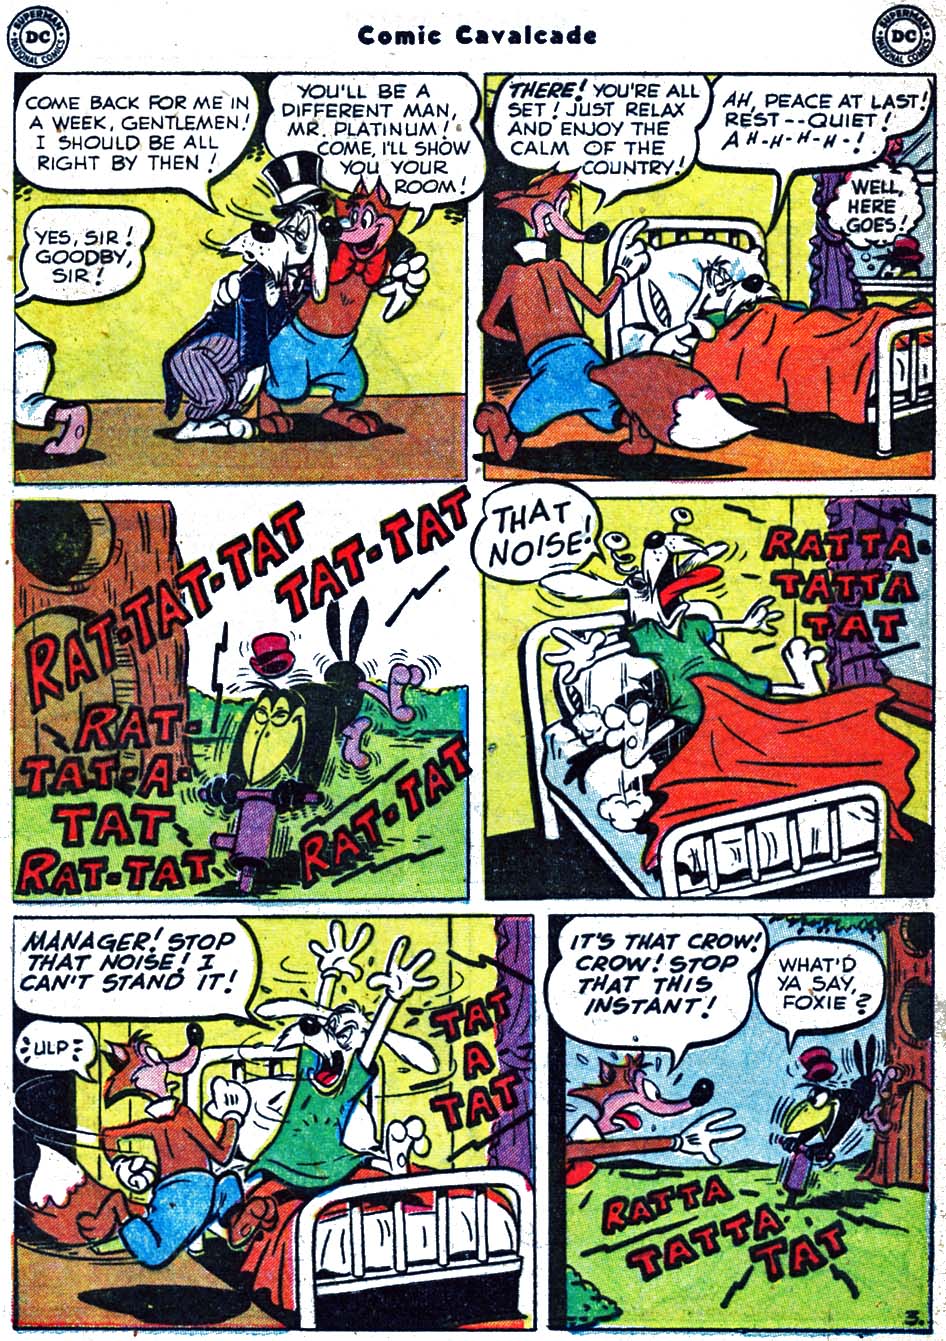 Comic Cavalcade issue 47 - Page 5